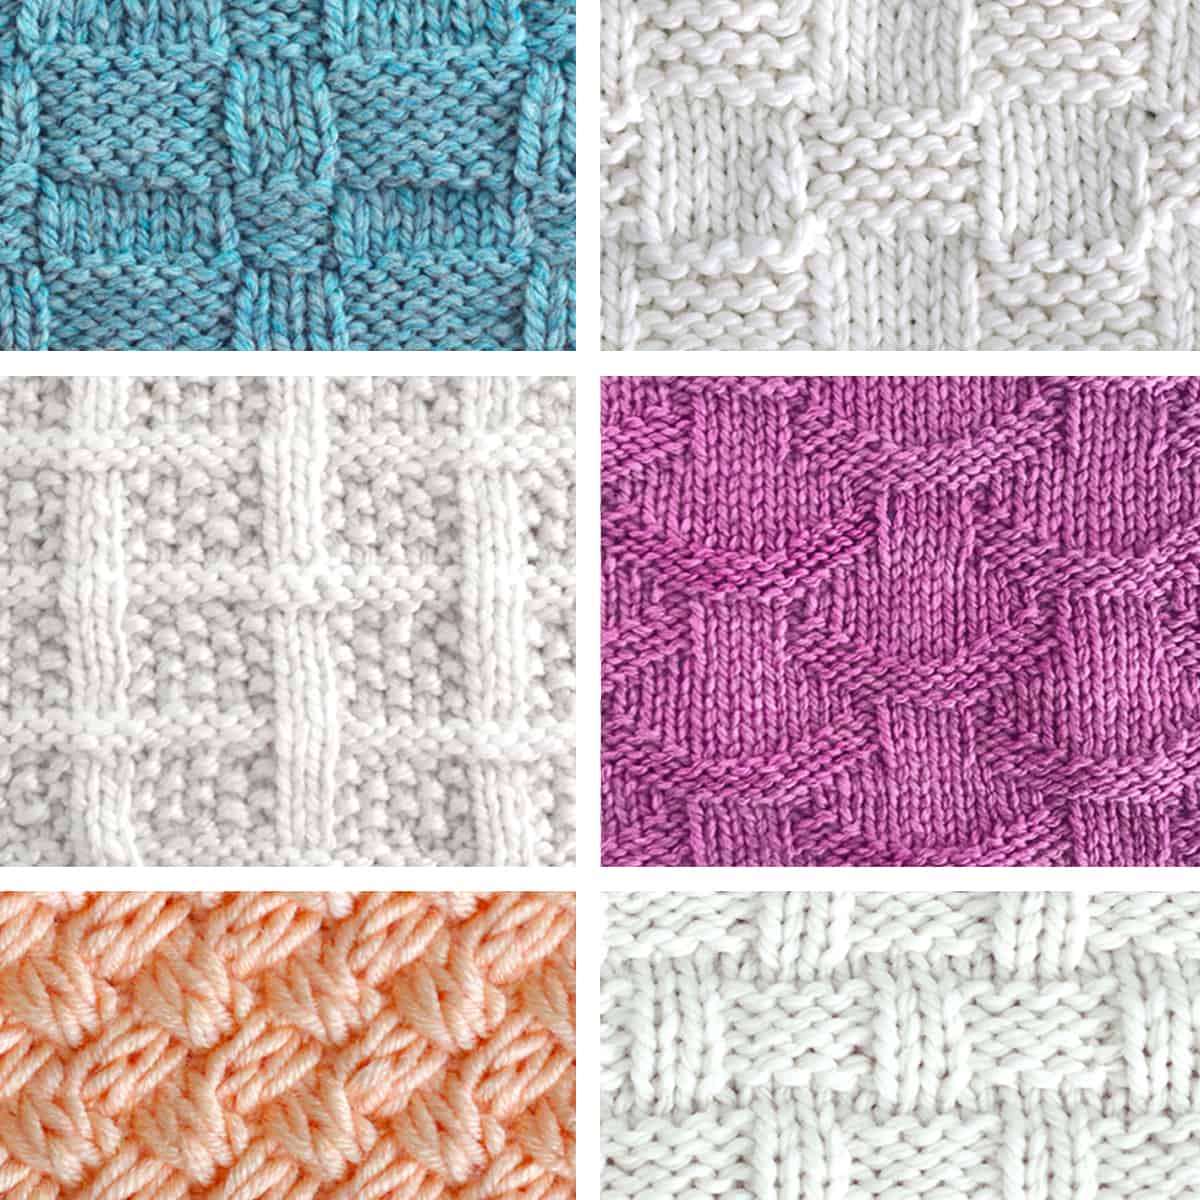 103 Different Knitting Stitches - Studio Knit